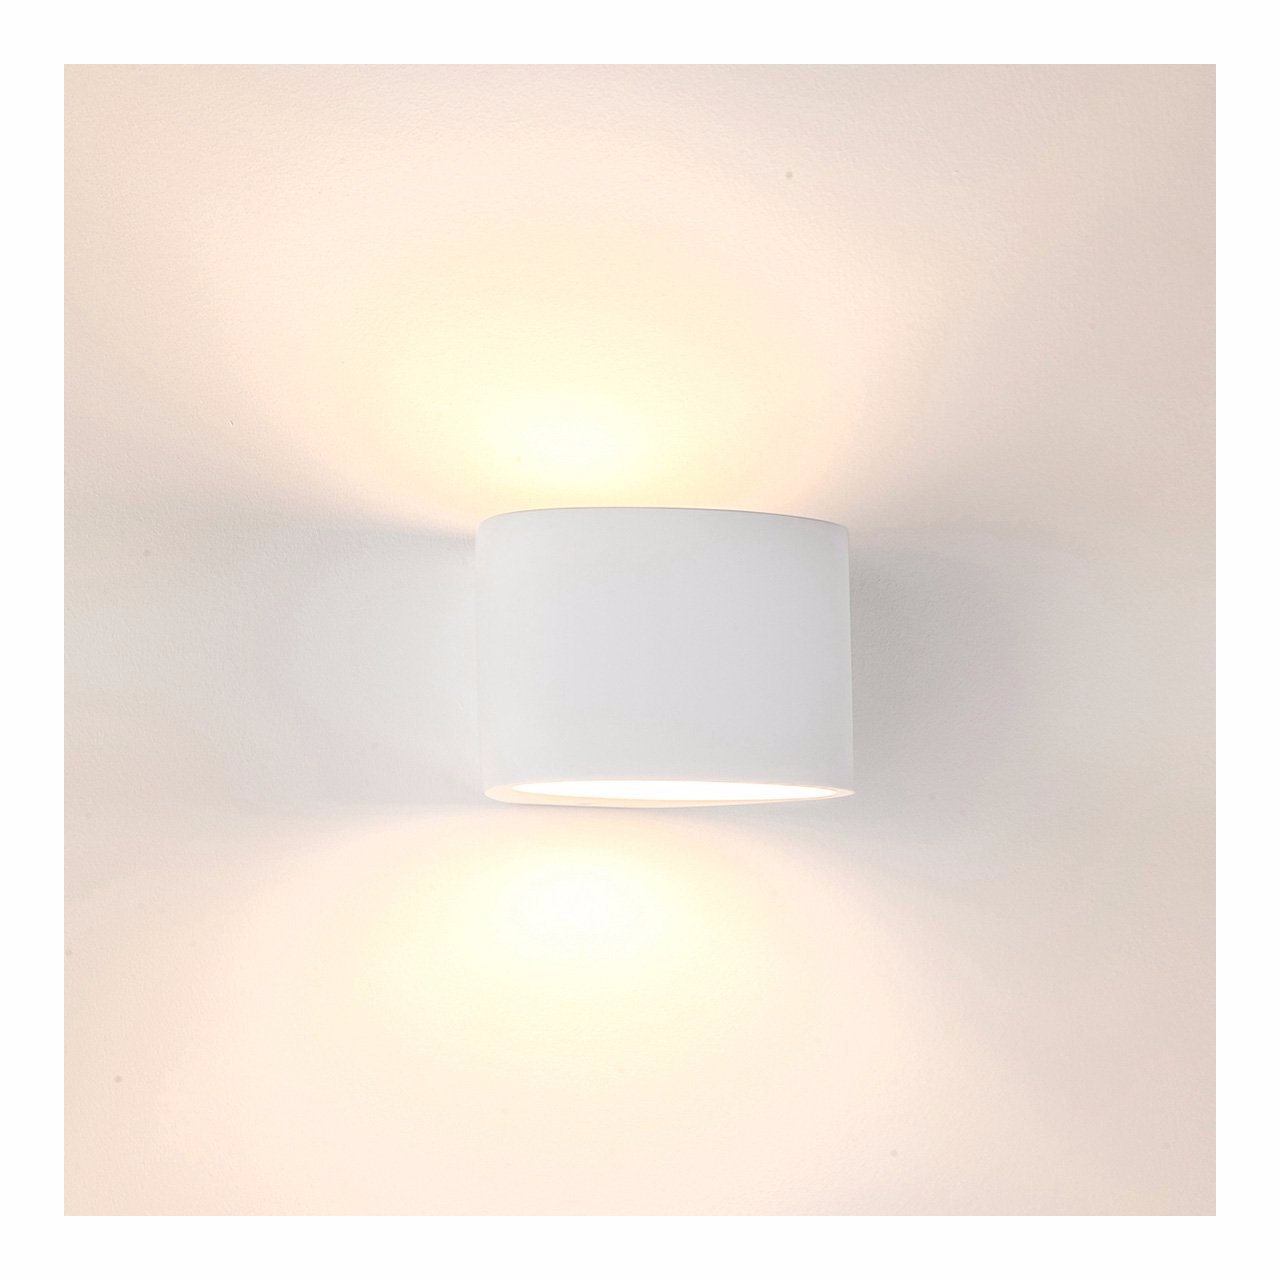 Hv8025 - Arc Small LED Wall Plaster Light